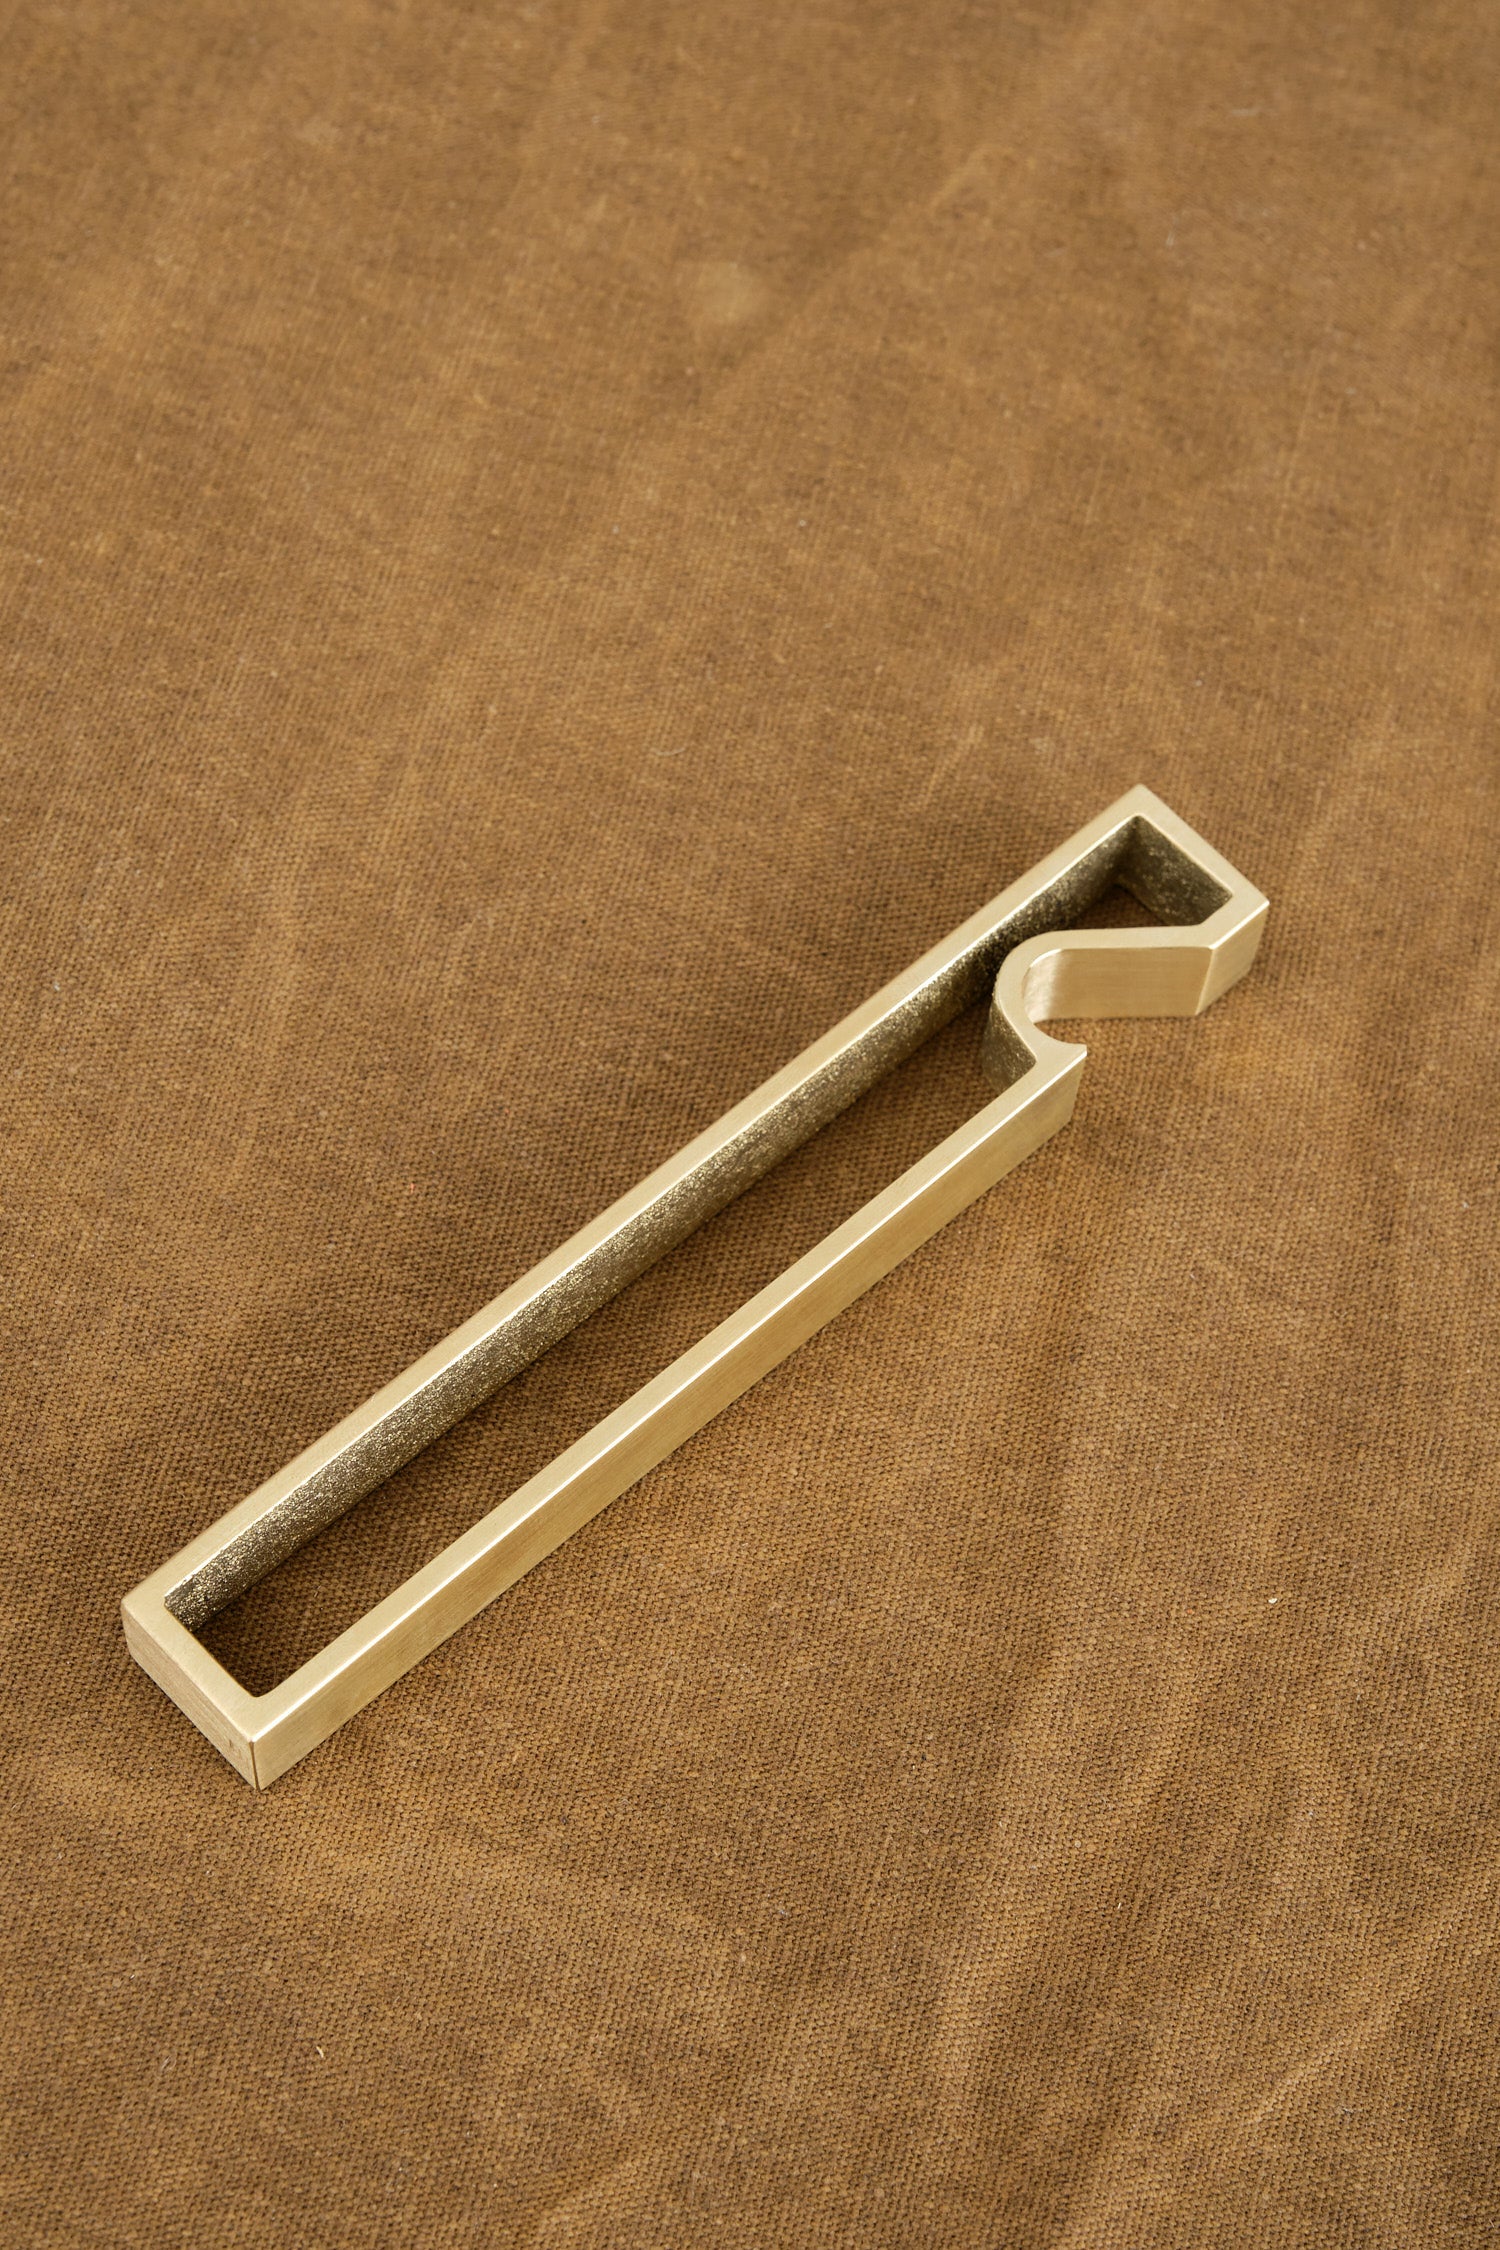 Solid brass bottle opener